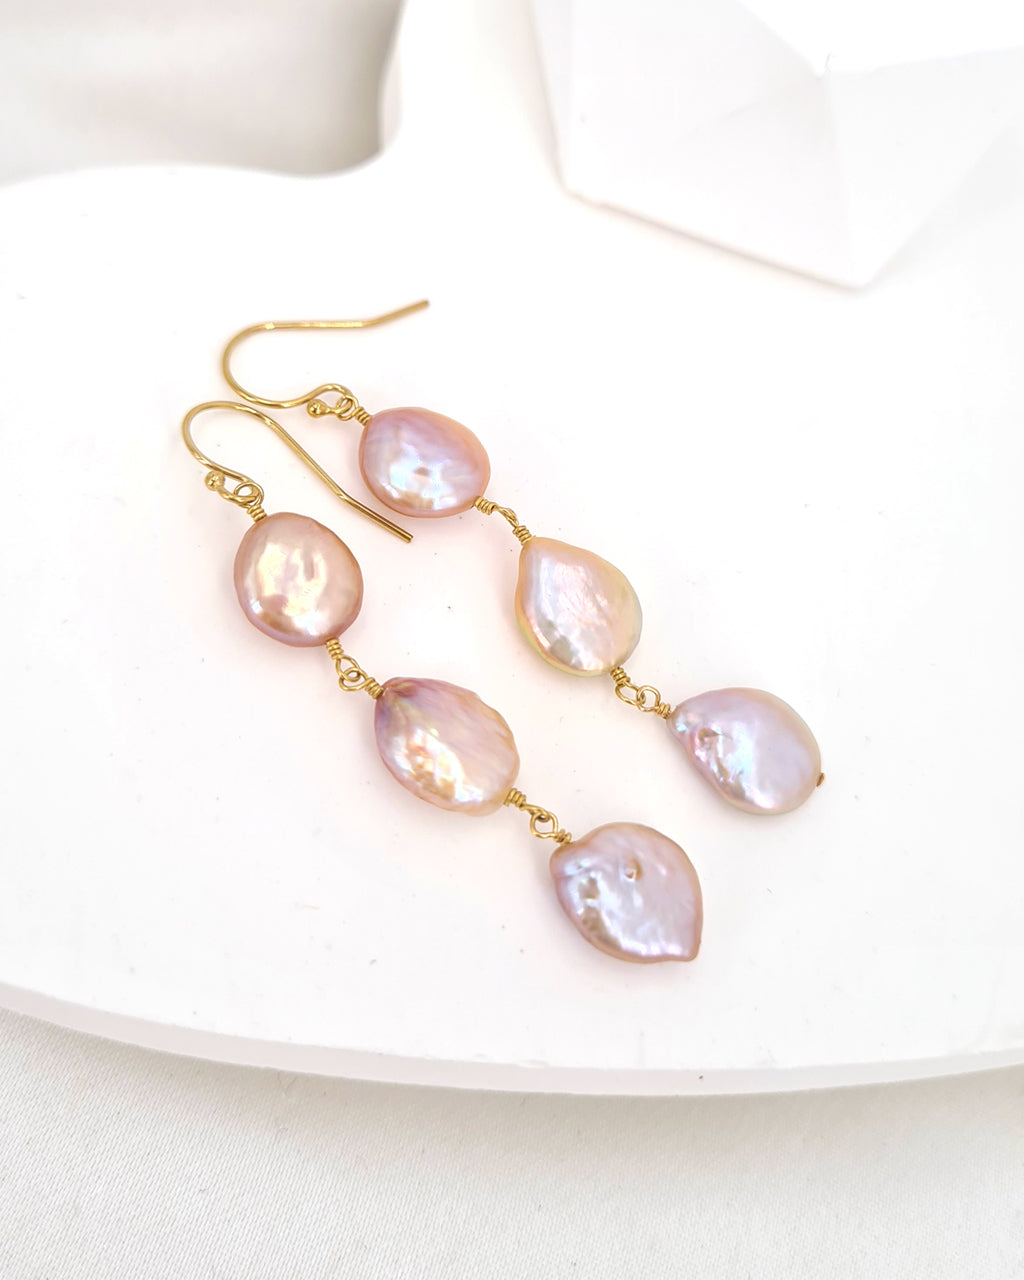 Freshwater Pearl Earrings - Light Pinkish Purple Pearl Gold Earrings Handmade in Singapore